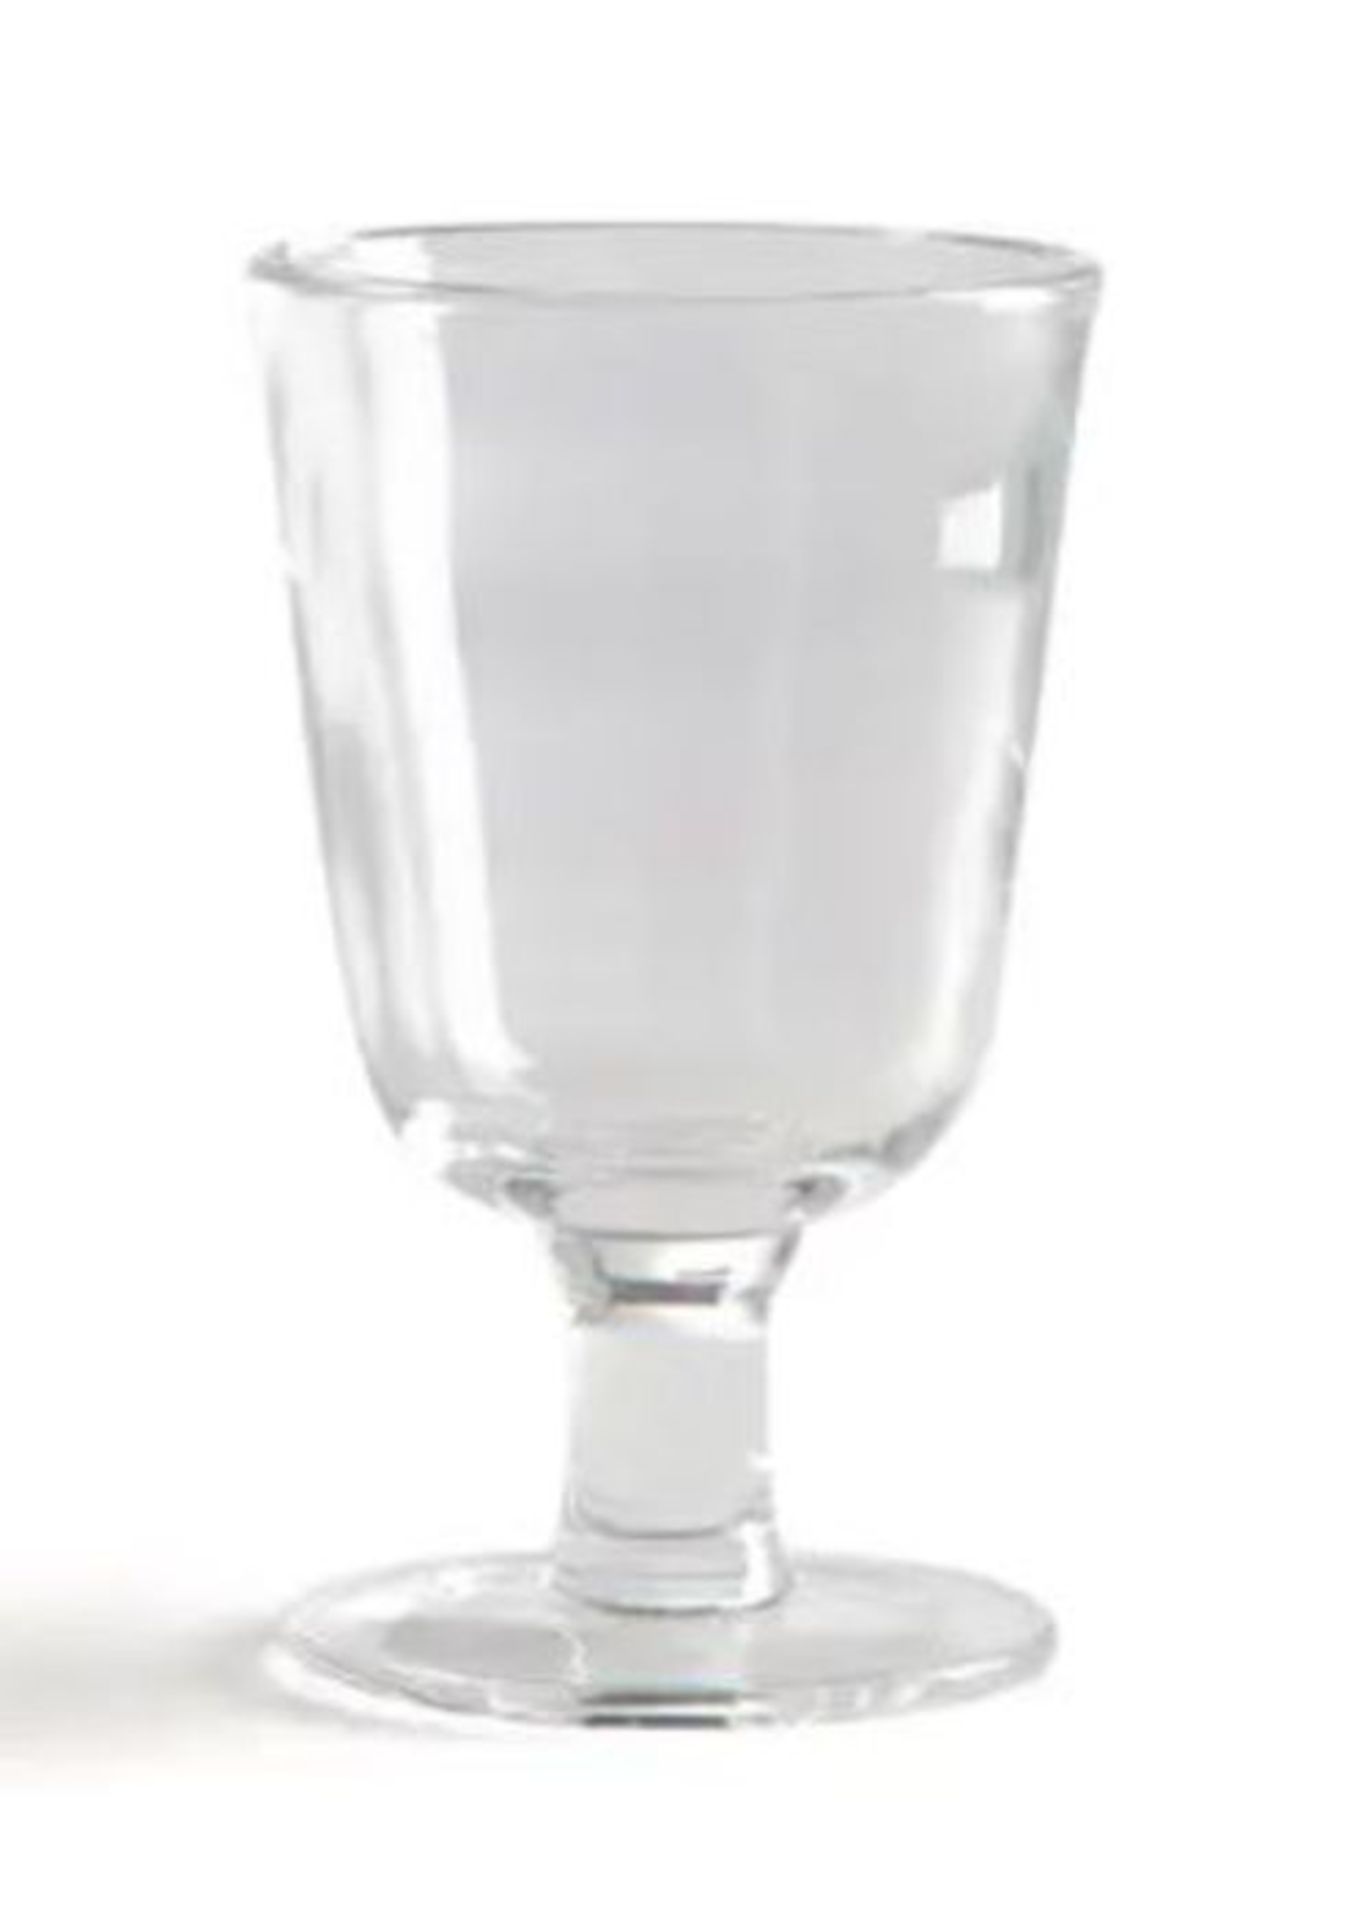 1 X NILOA STEMMED GLASSES (SET OF 6) / GRADE A / RRP £40.00